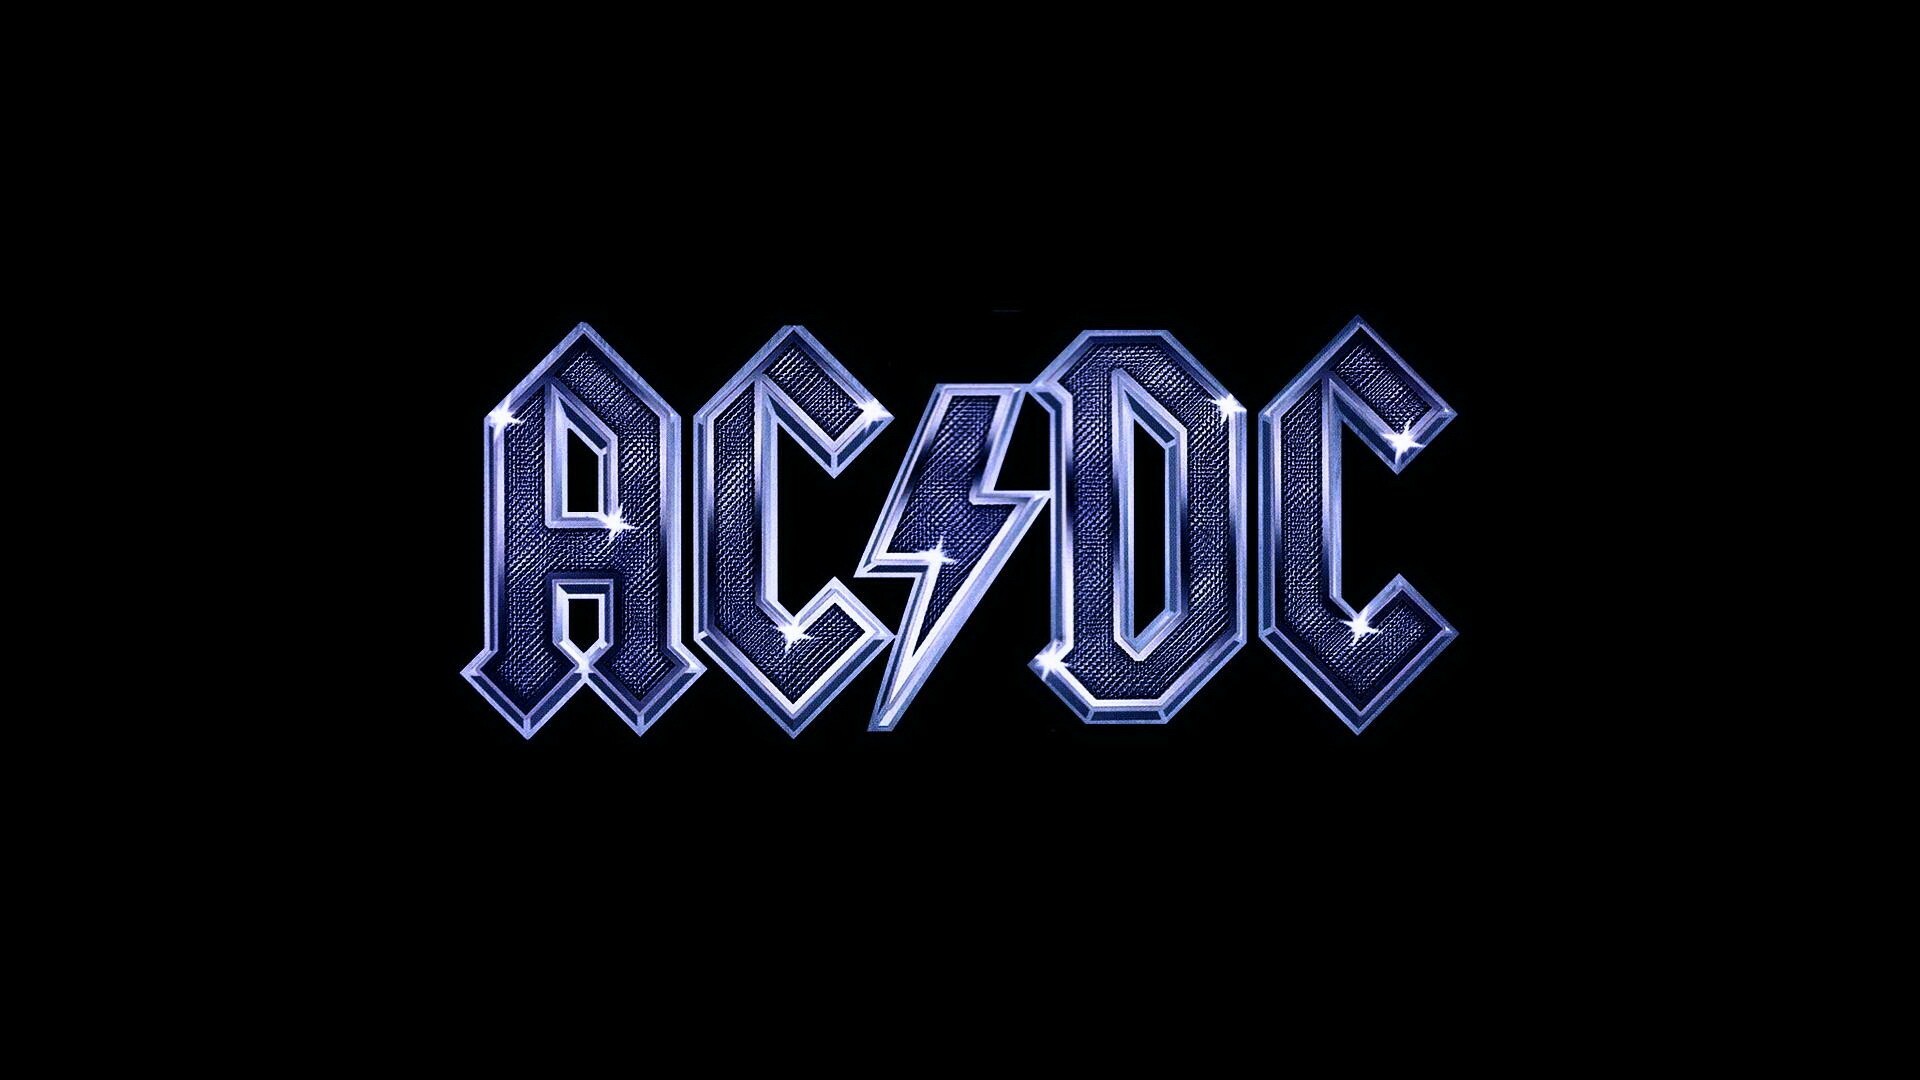 AC/DC Wallpaper, HD Background Image, Rock and Roll Power, Music Appreciation, 1920x1080 Full HD Desktop